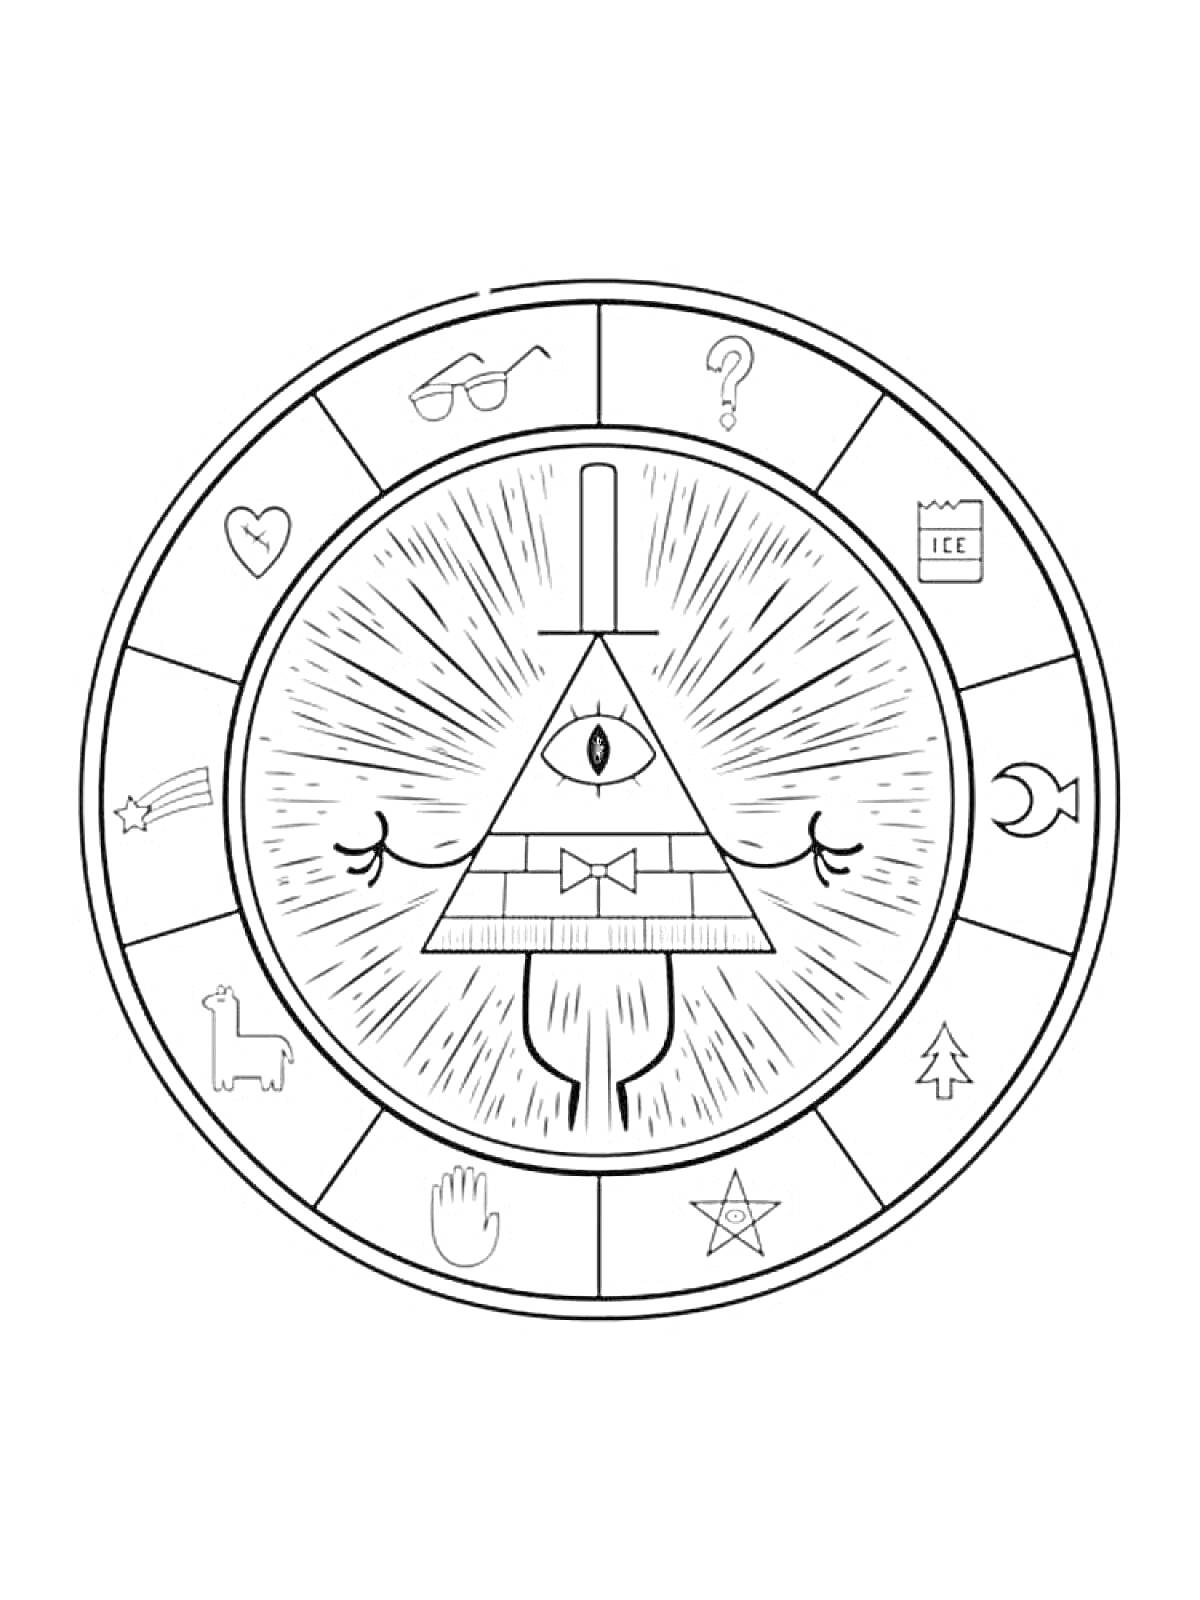 Раскраска Билл Шифр с символами: очки, знак вопроса, чашка, месяц, елка, звезда, рука, лама, сердечко, падающая звезда